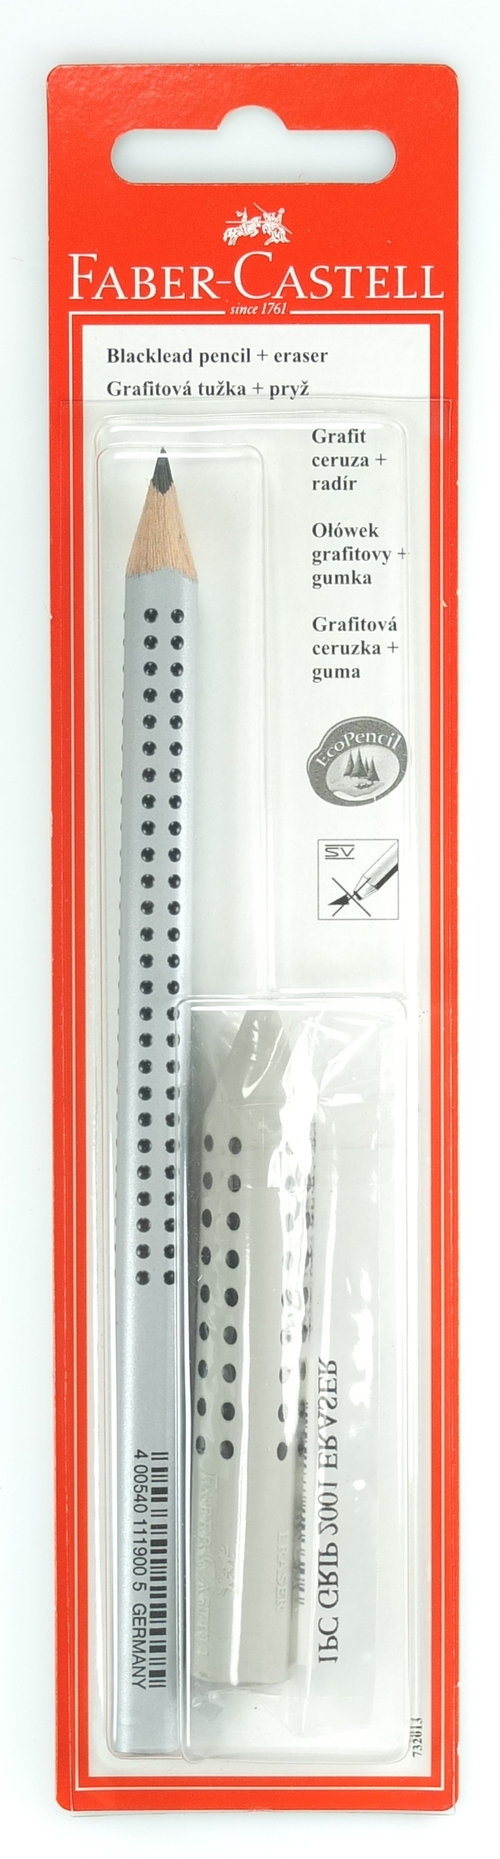 Ołówek Jumbo Grip B 1 sztuka + gumka Grip 2001 szara (263298)